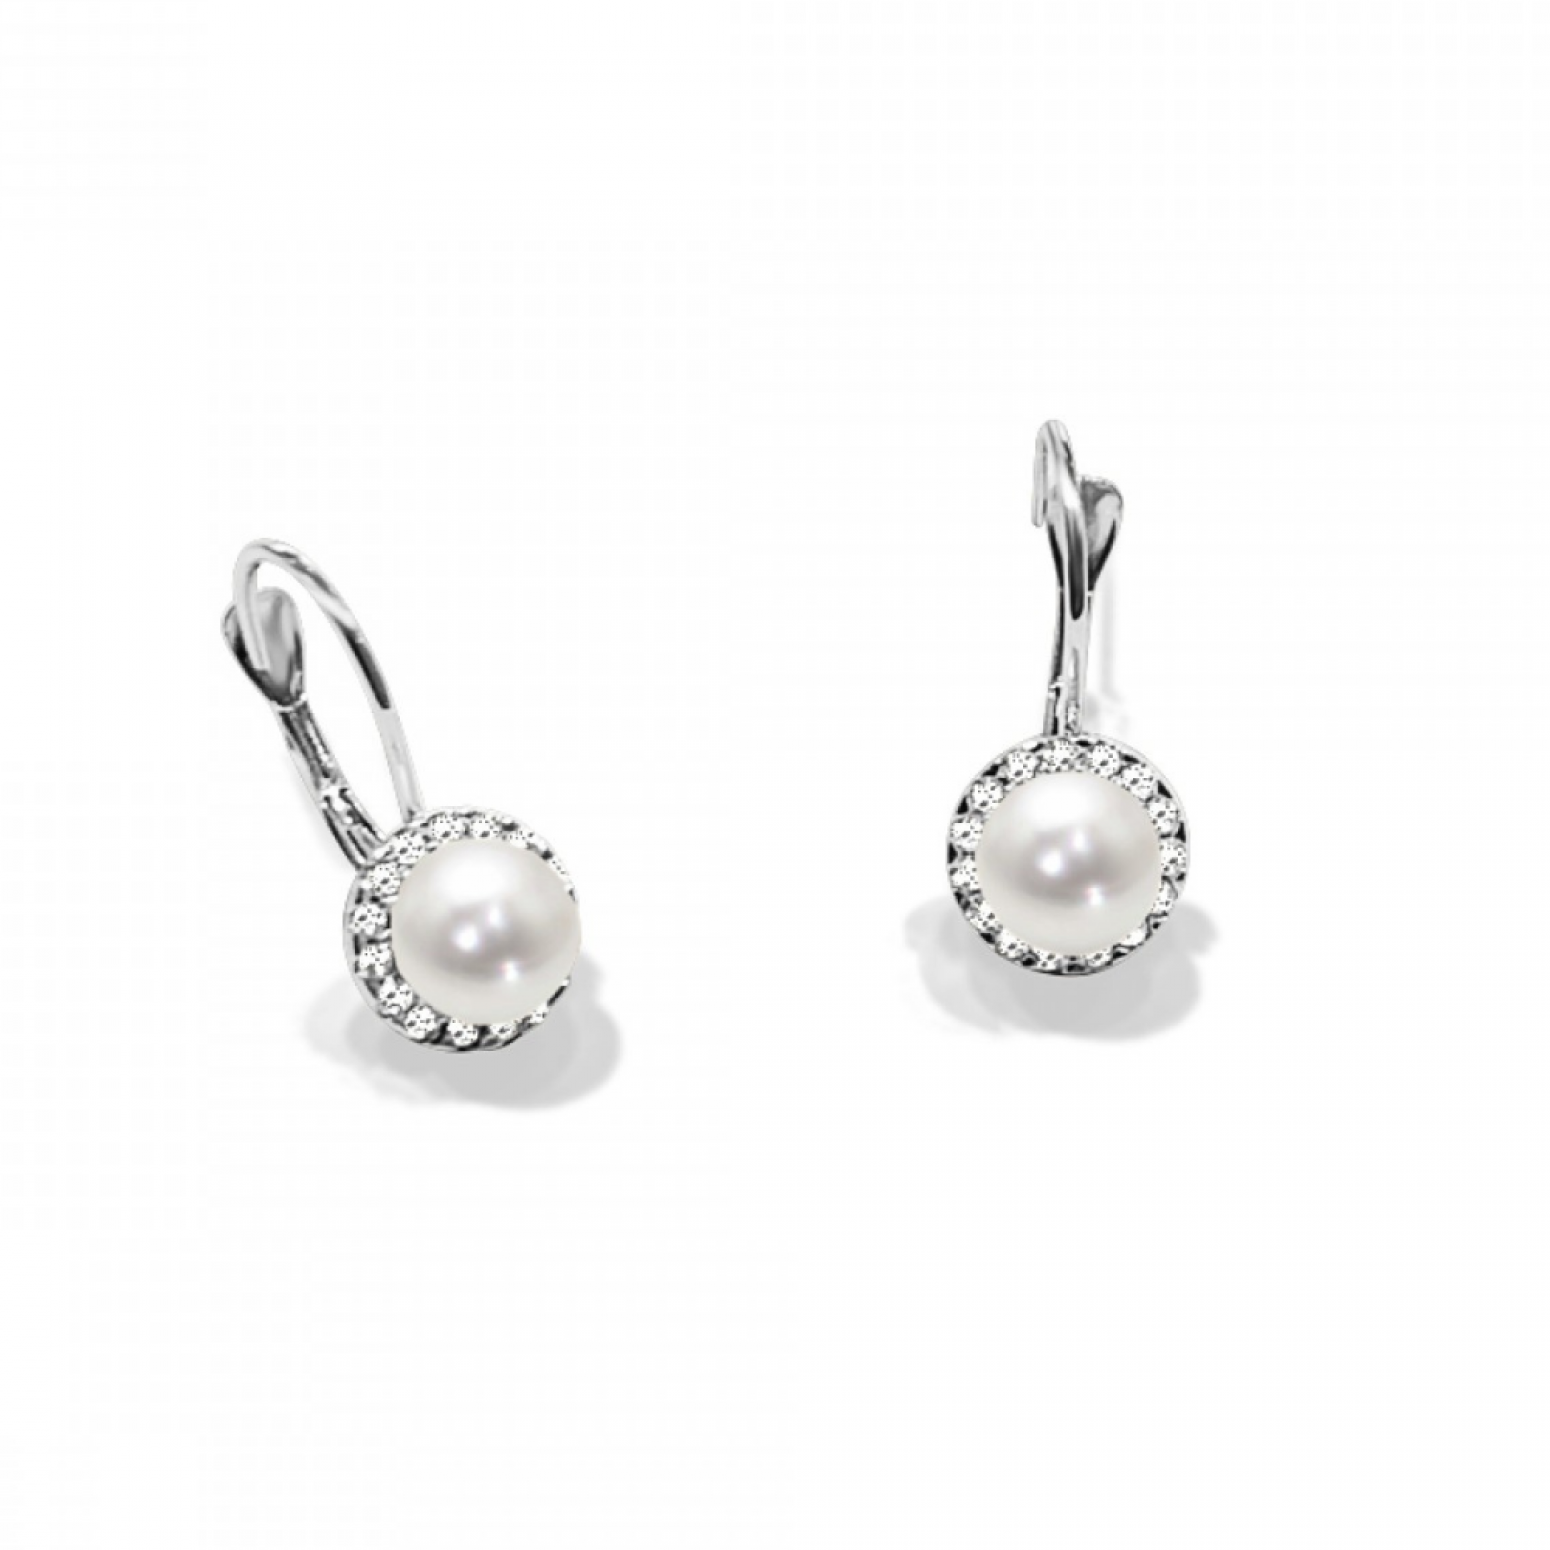 Earrings K14 white gold with pearls and zircon, sk3175 EARRINGS Κοσμηματα - chrilia.gr